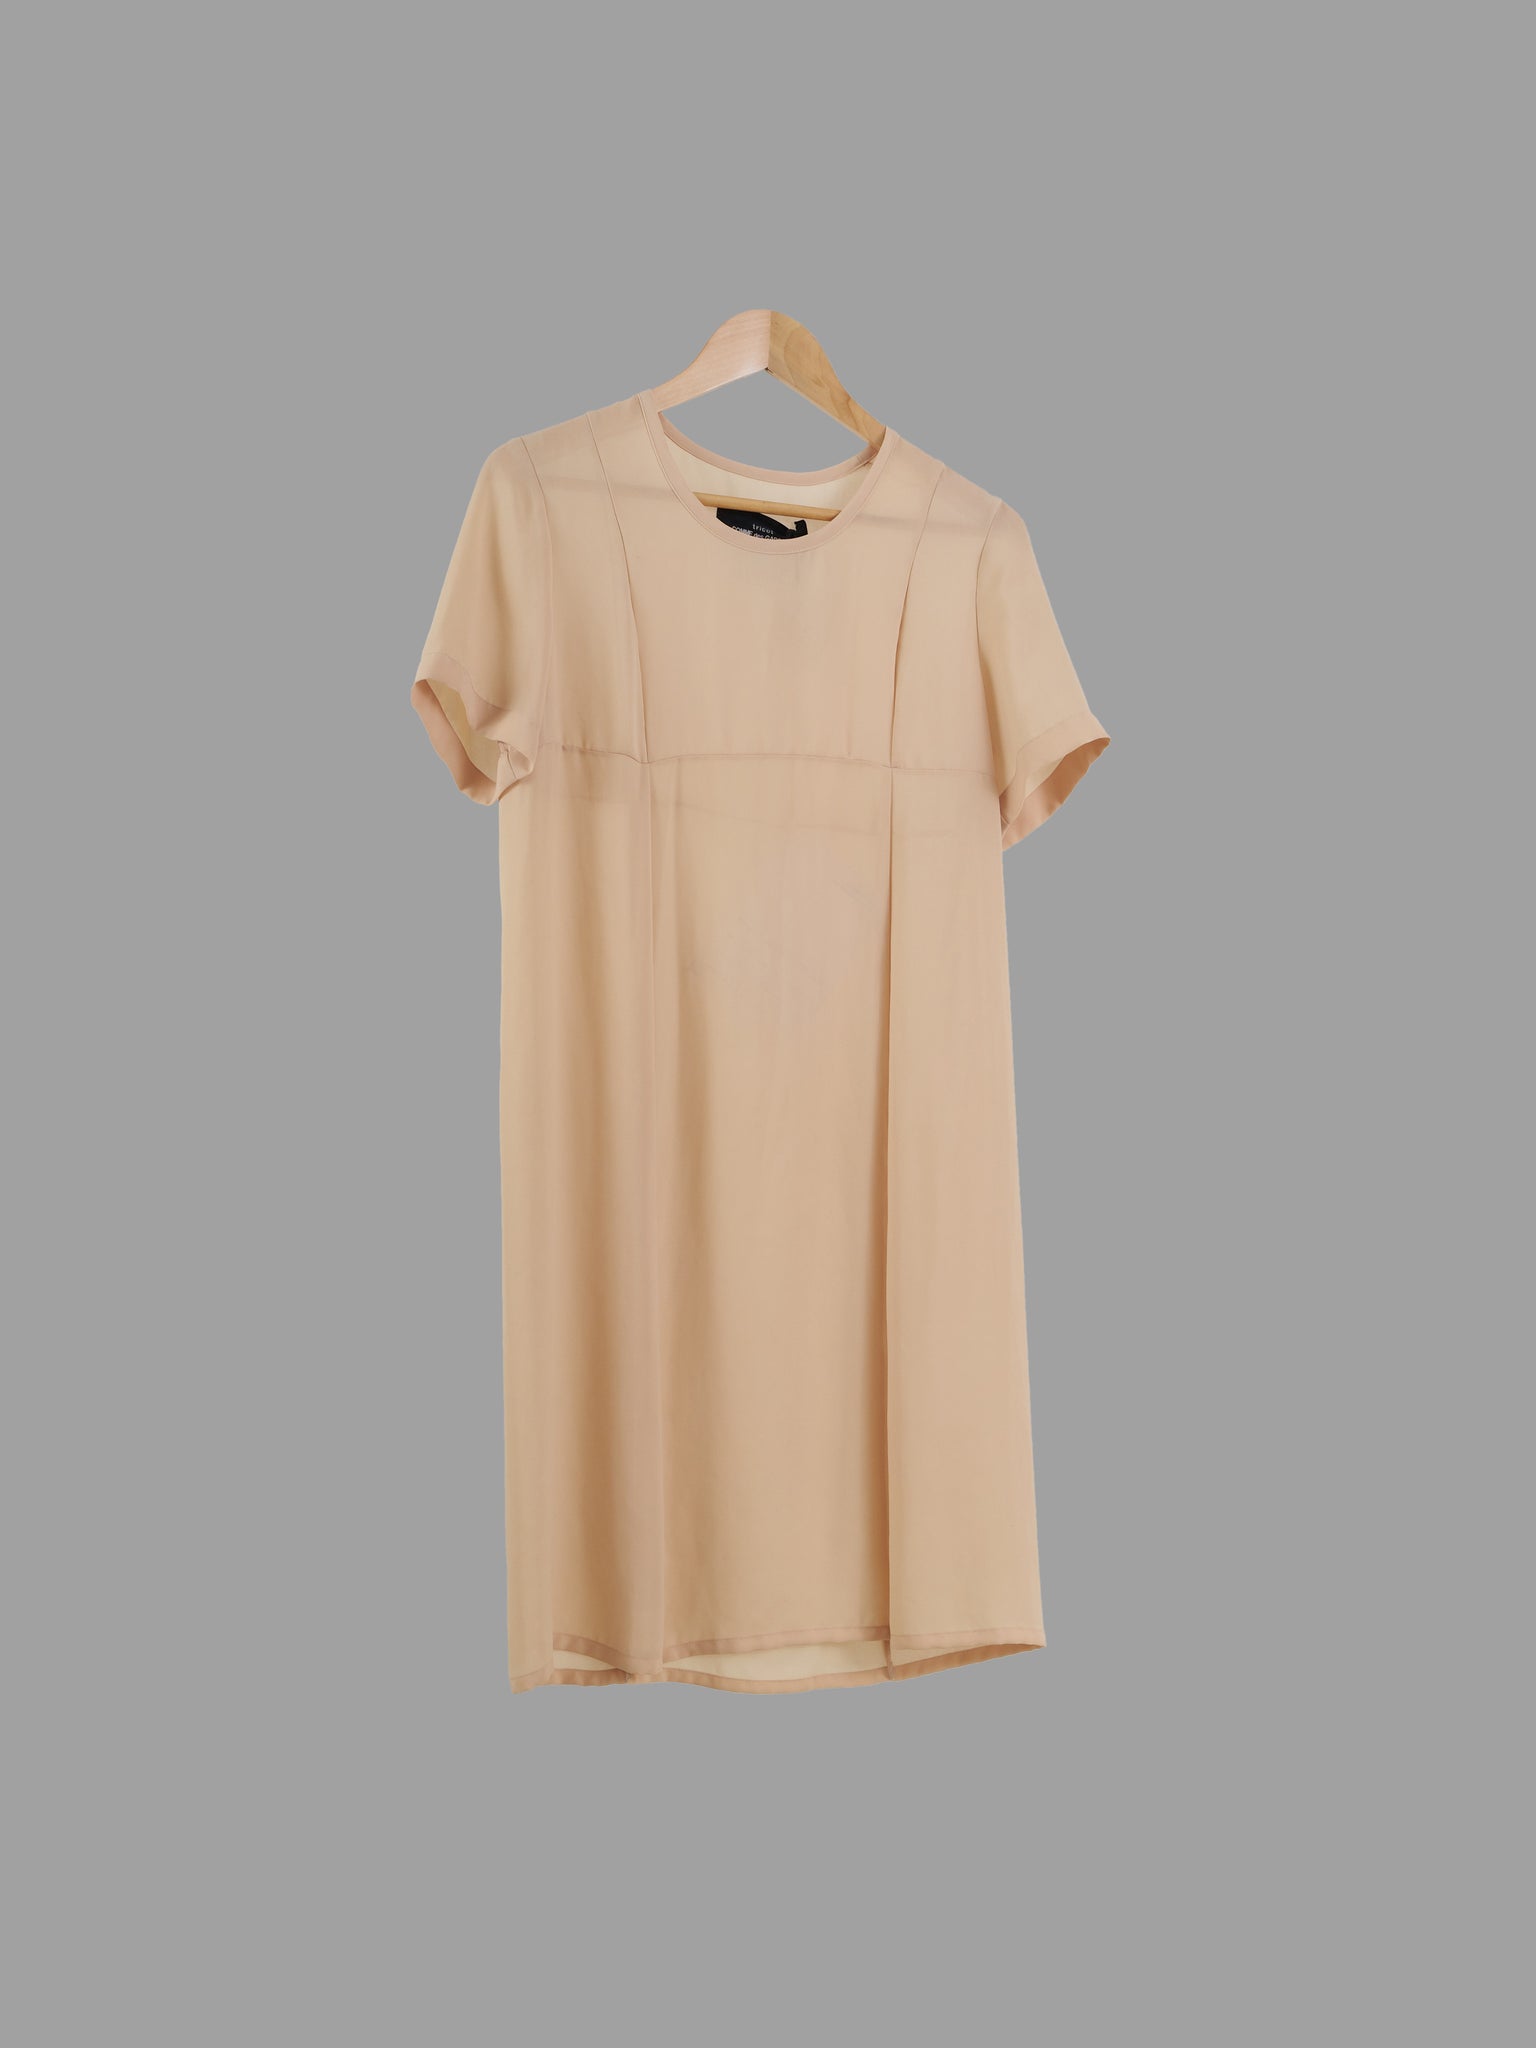 Tricot Comme des Garcons 1994 beige sheer polyester short sleeve dress